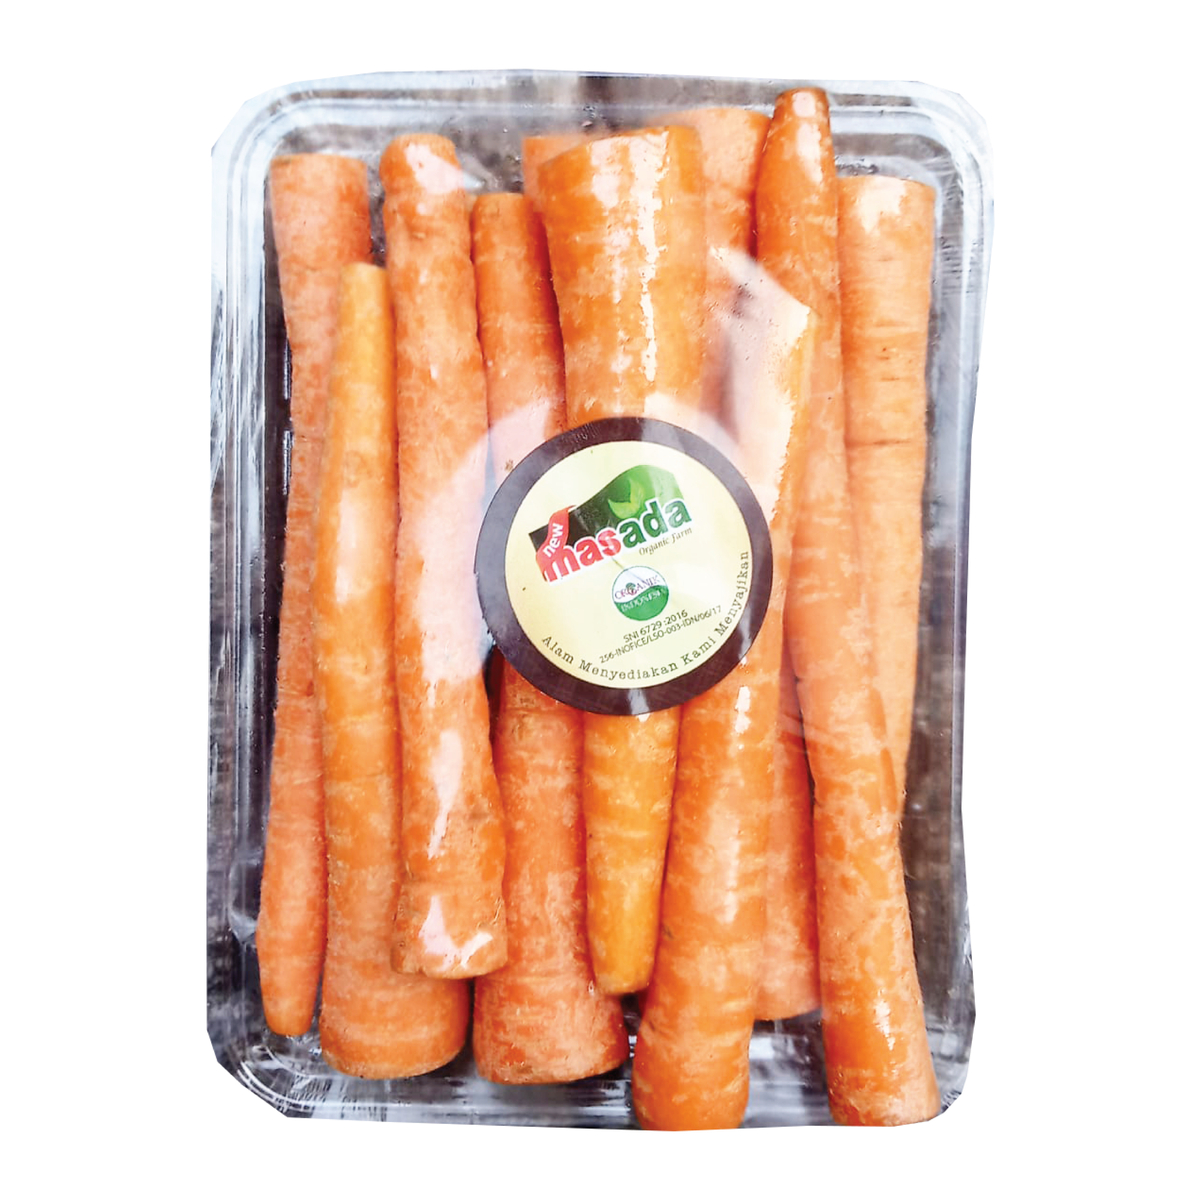 Masada Carrot Baby Organik 250g